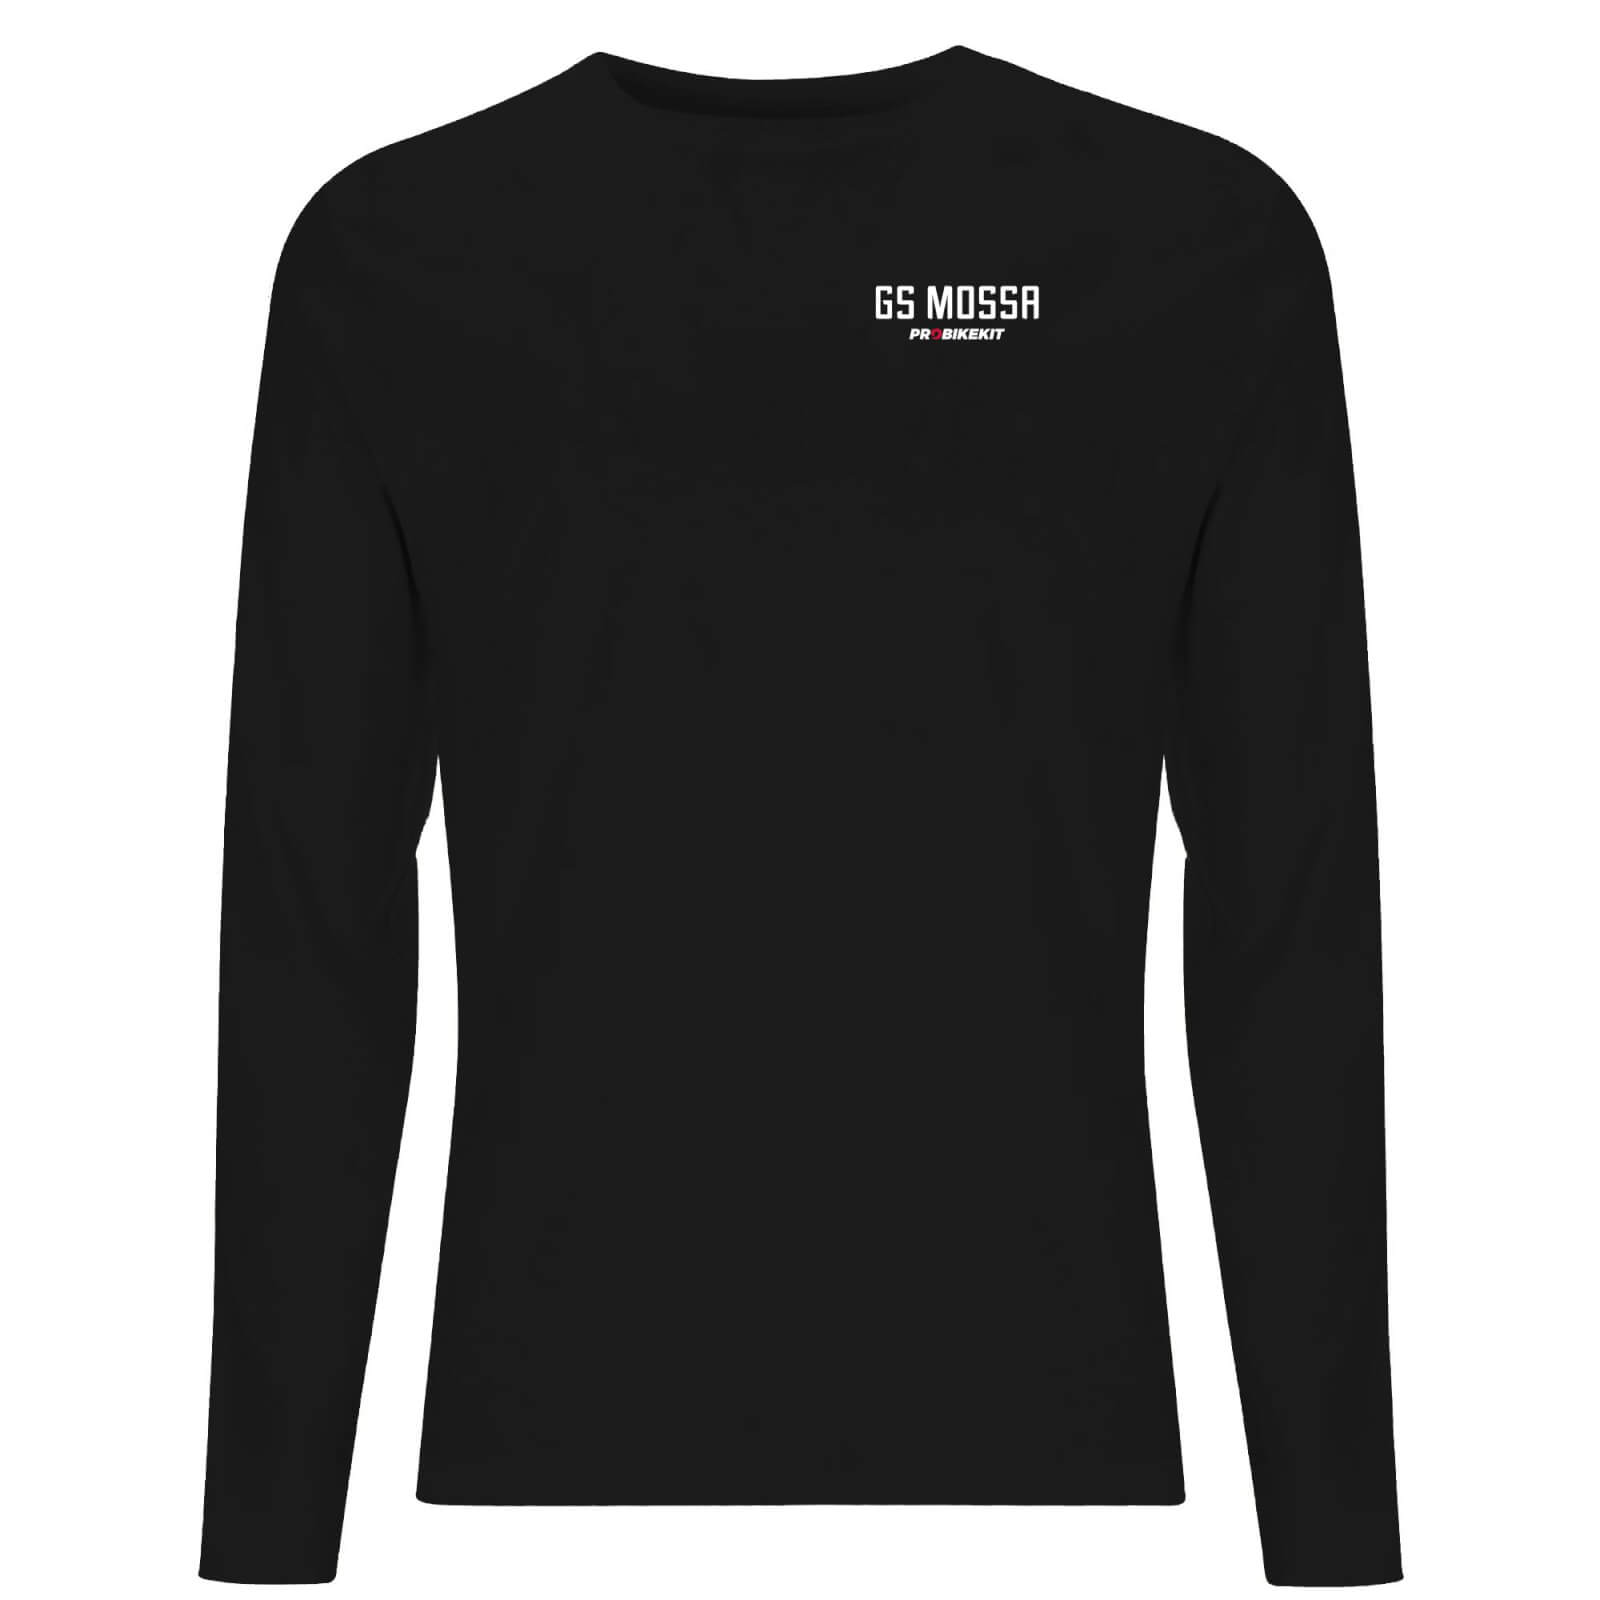 PBK GS Mossa Meet Ride Feel Good Techno Men's Long Sleeve T-Shirt - Black - XS - Black